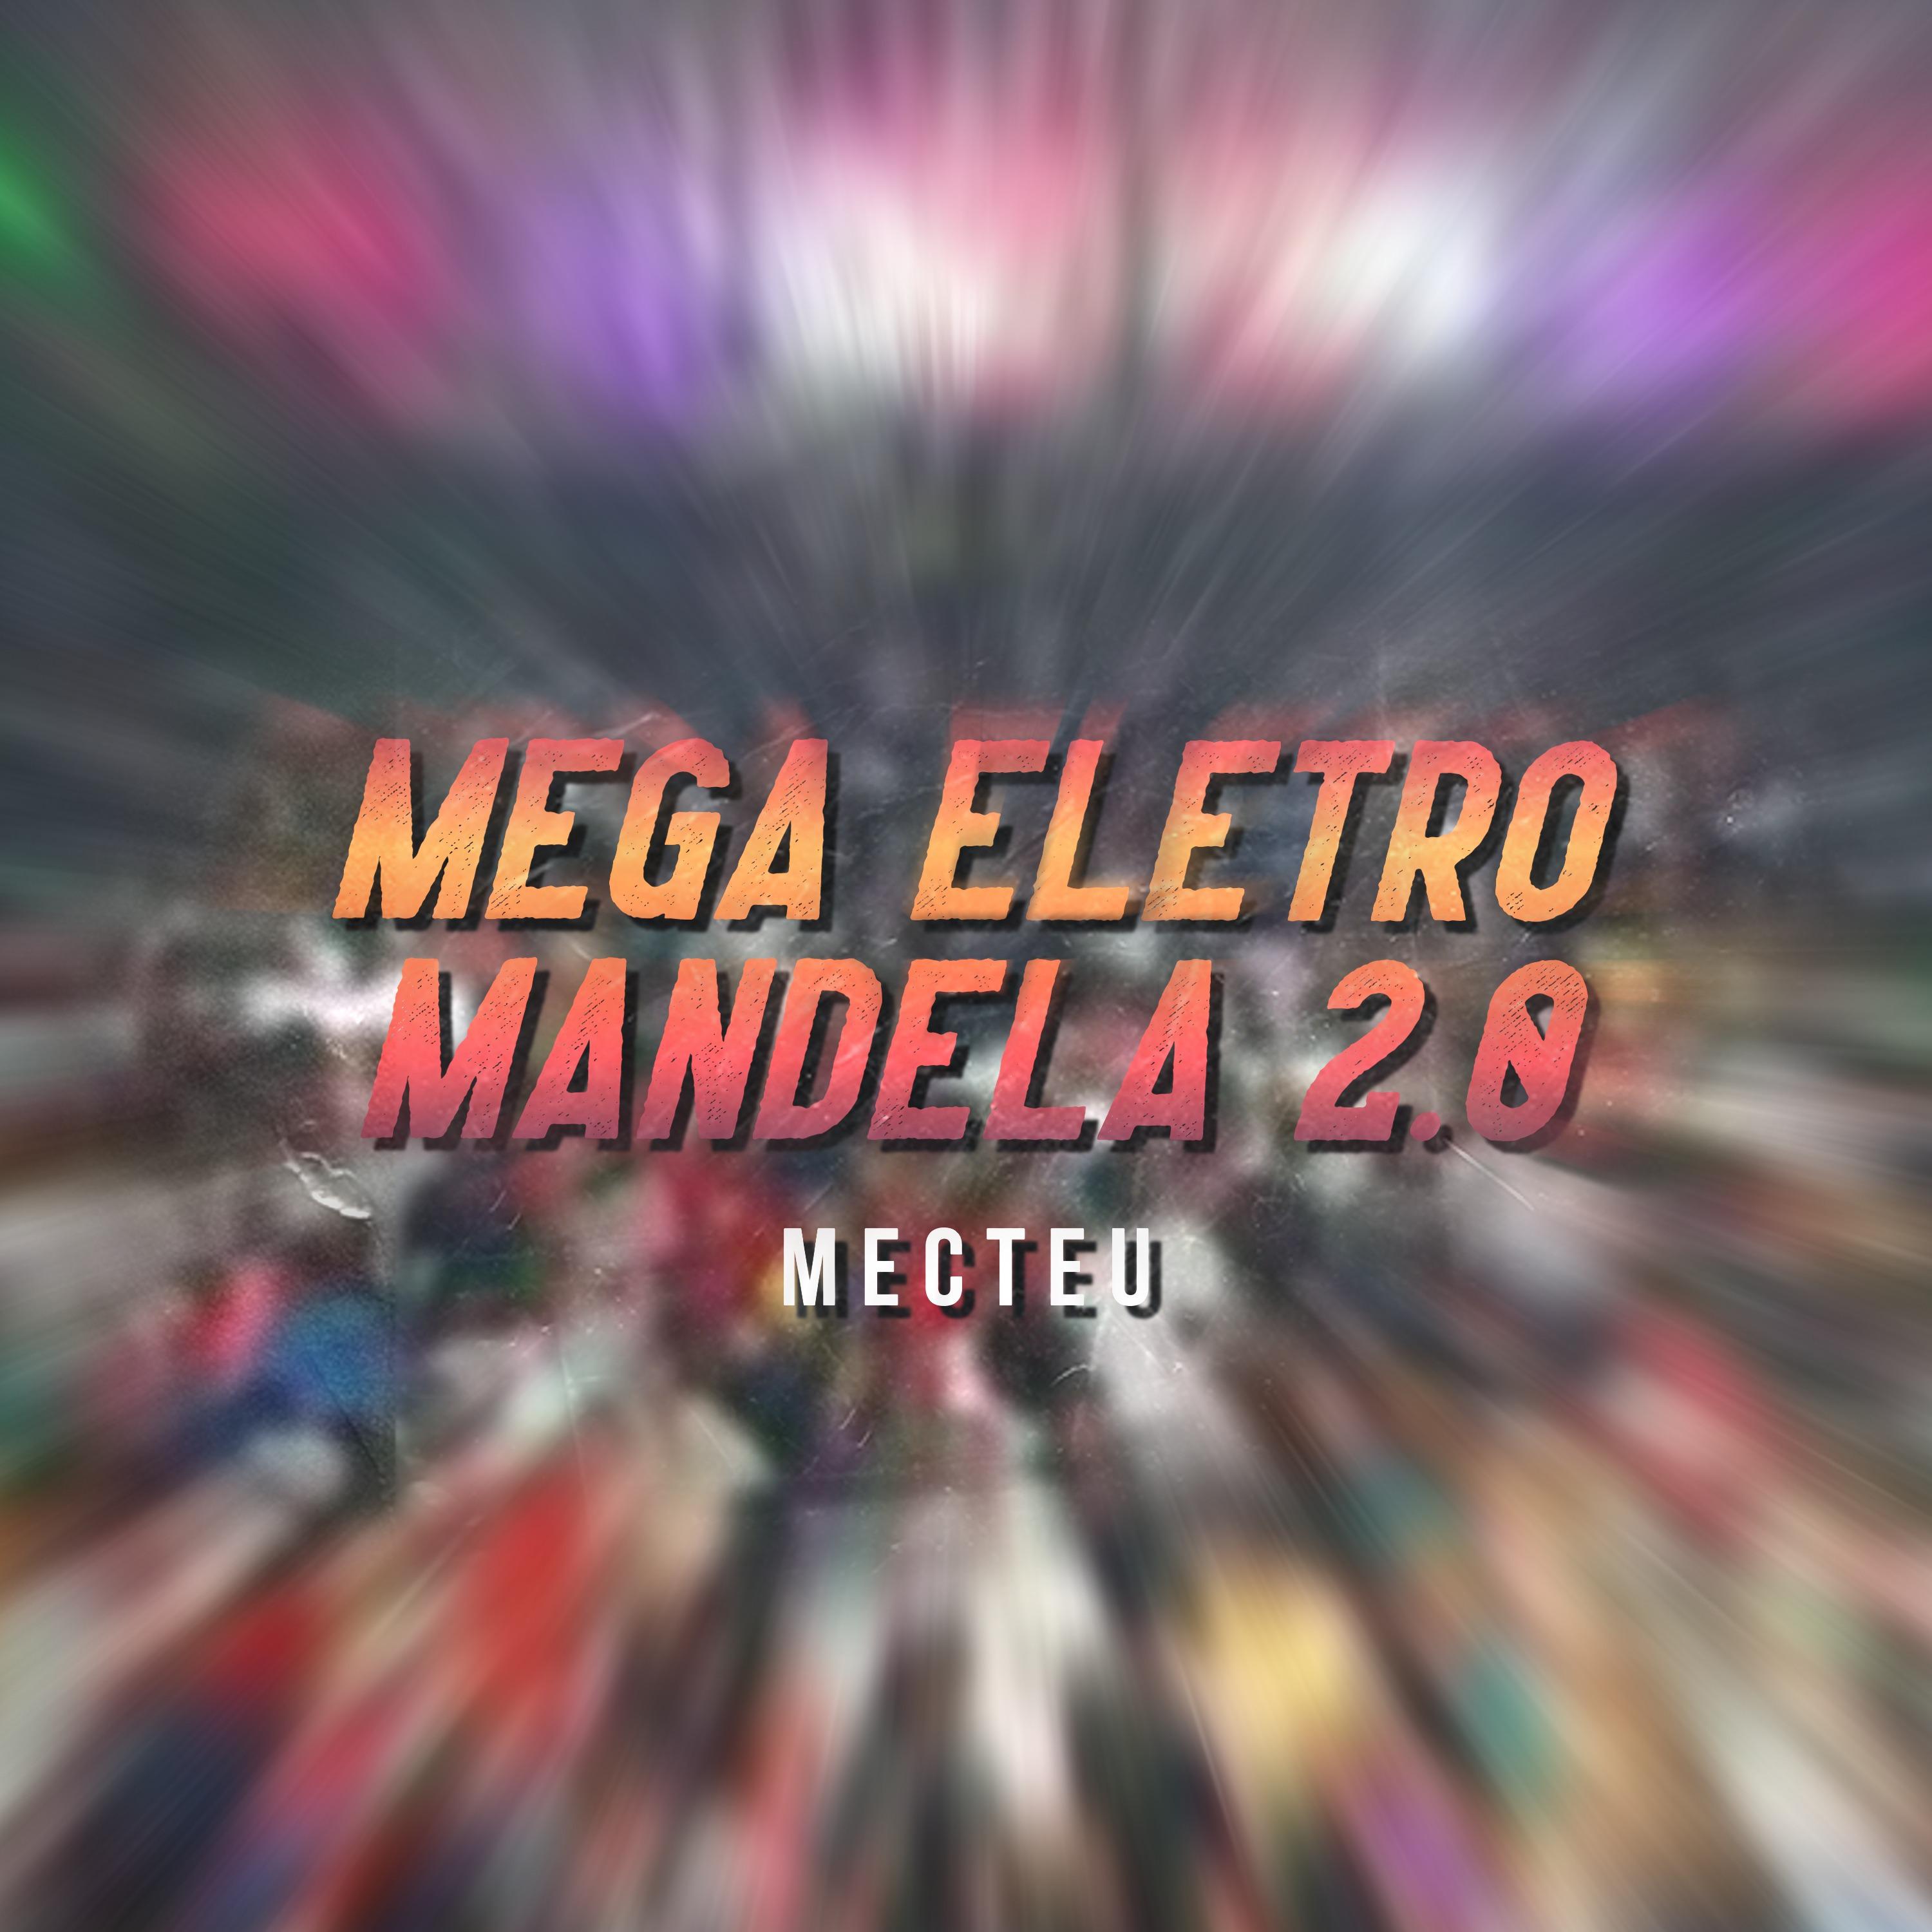 Mecteu - Mega Eletro Mandela 2.0